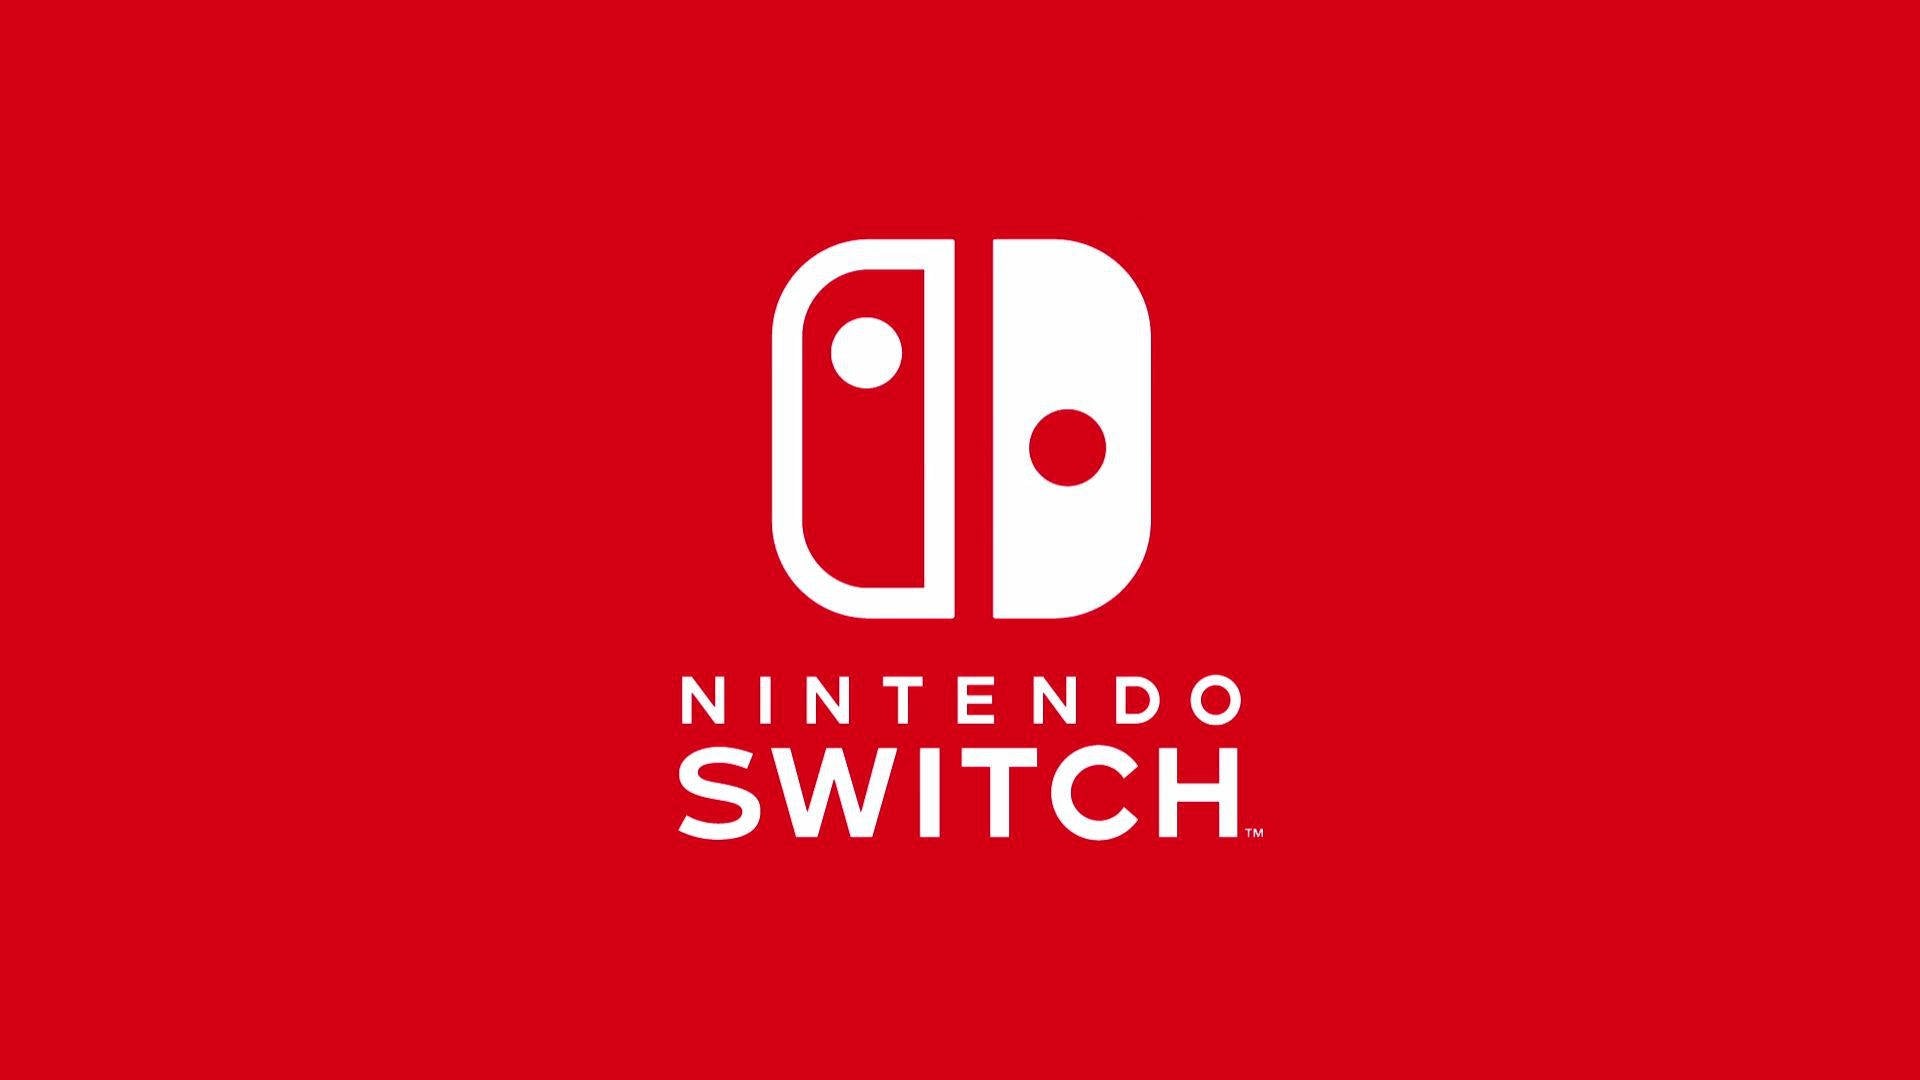 nintendo-switch-logo-plain-red-backdrop-qae8a9wnyklziv4i.jpg